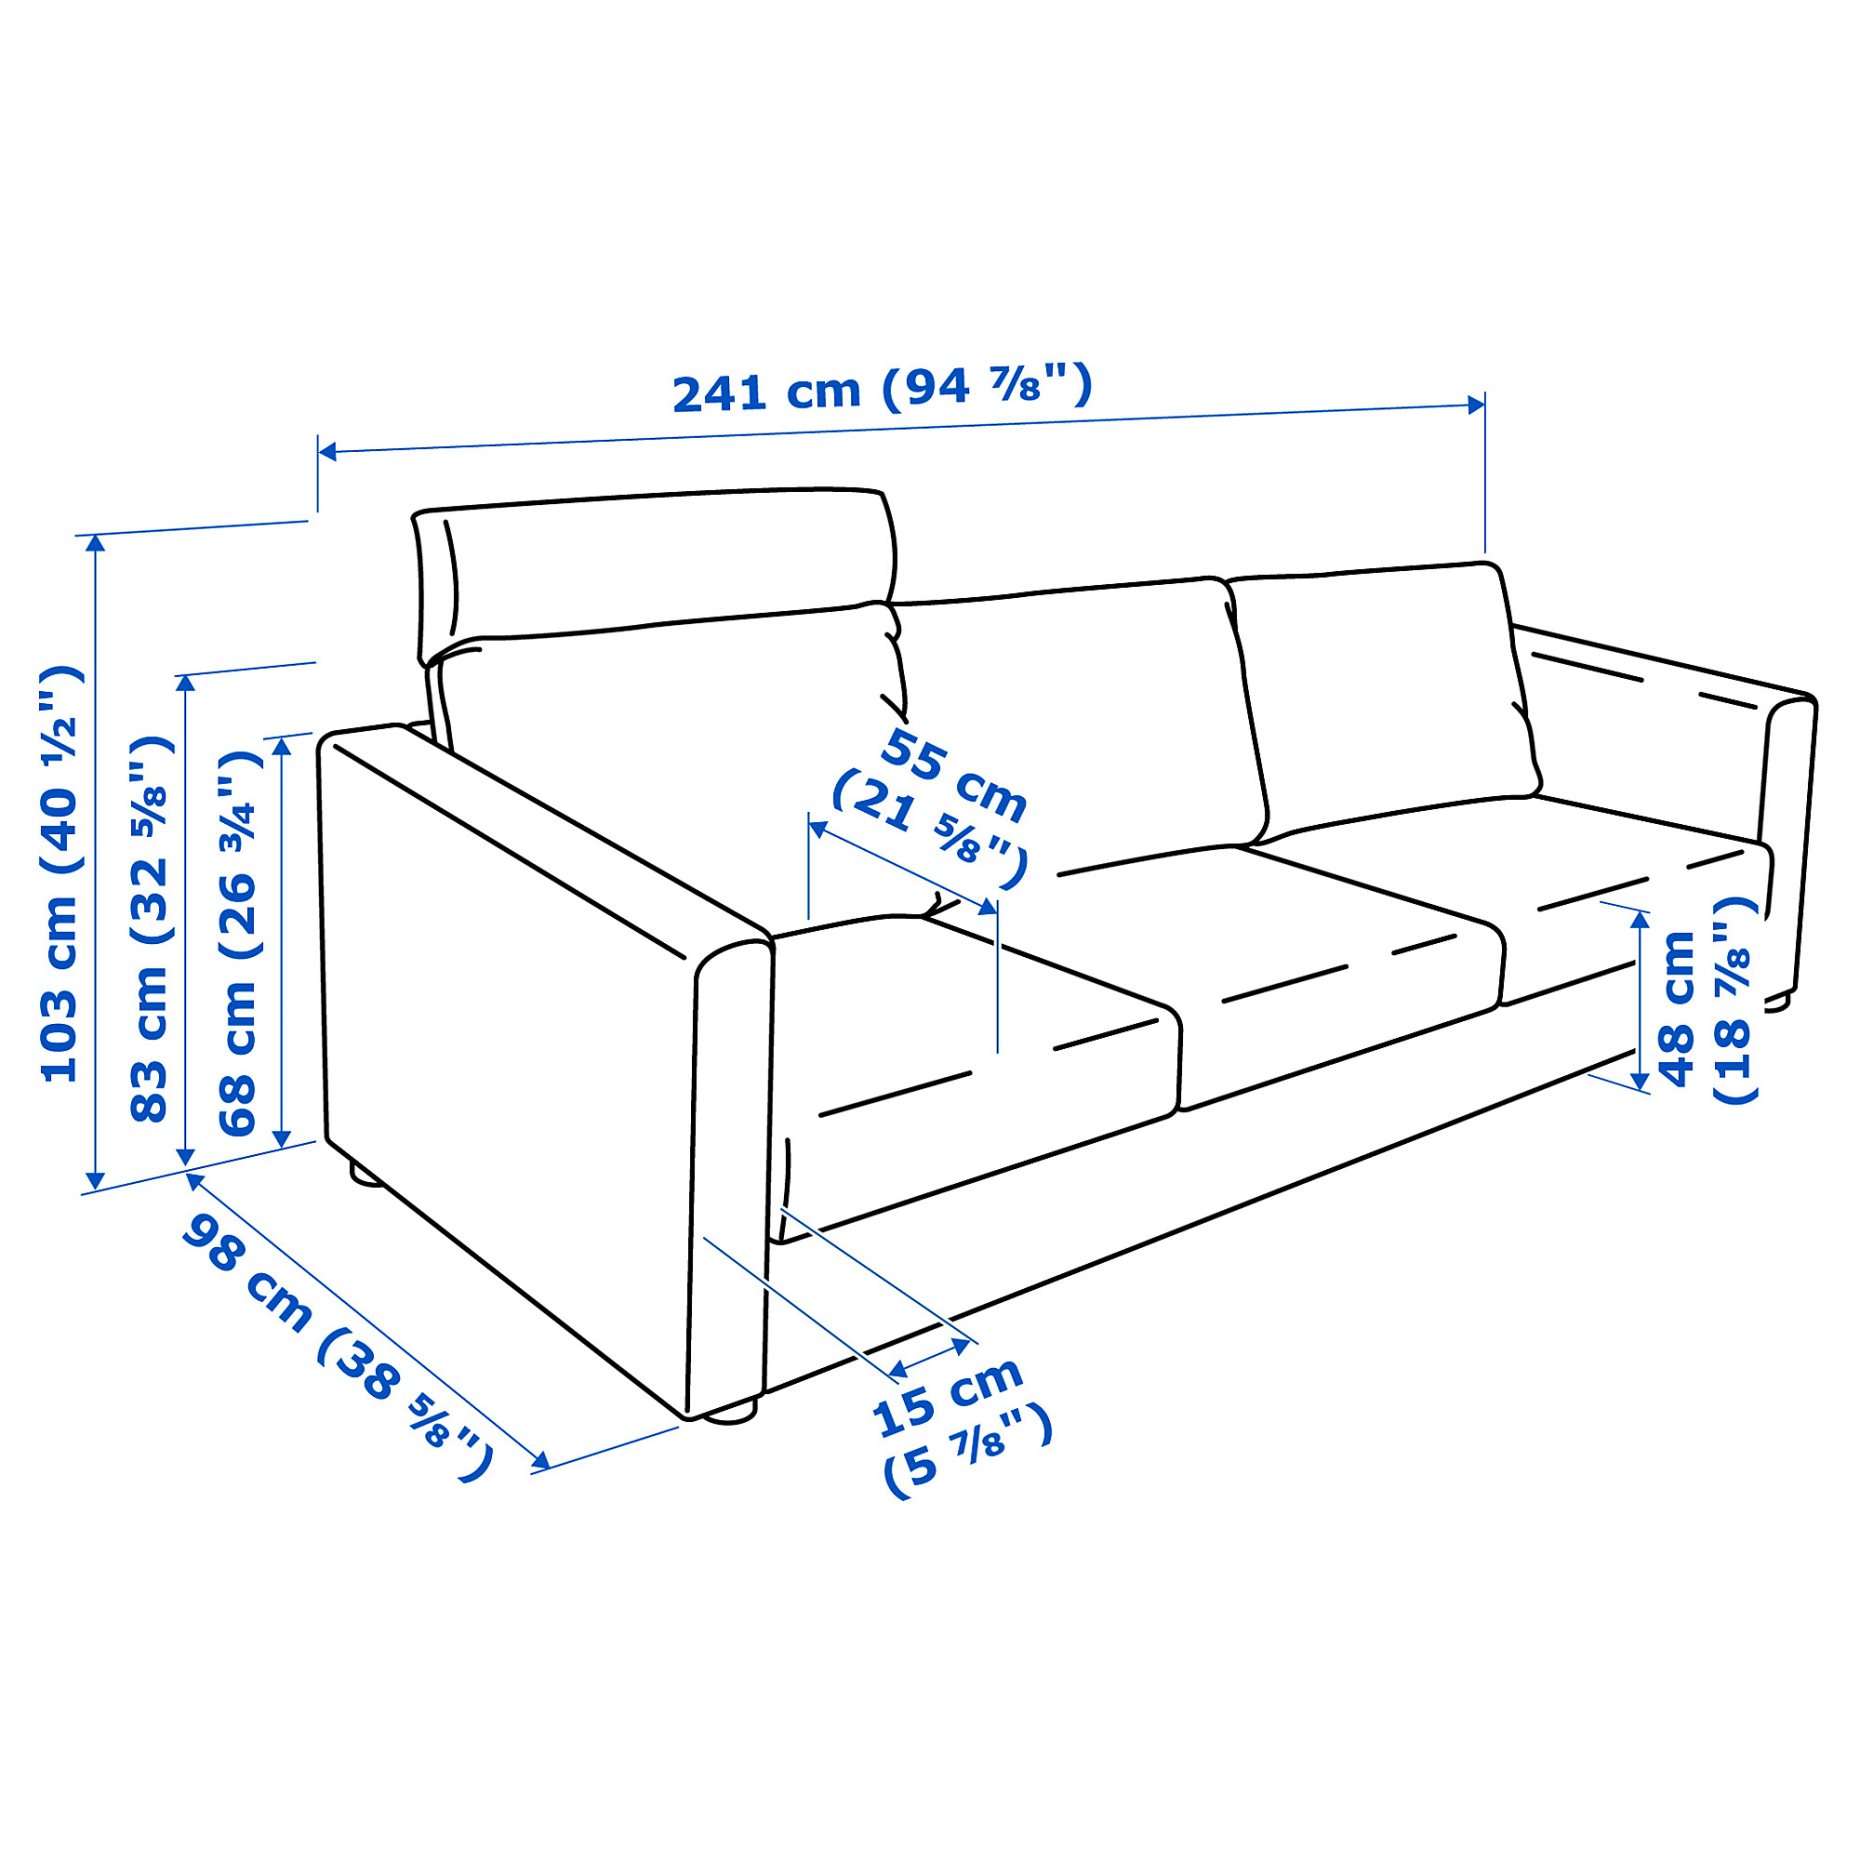 VIMLE, 3-seat sofa with headrest, 493.990.55